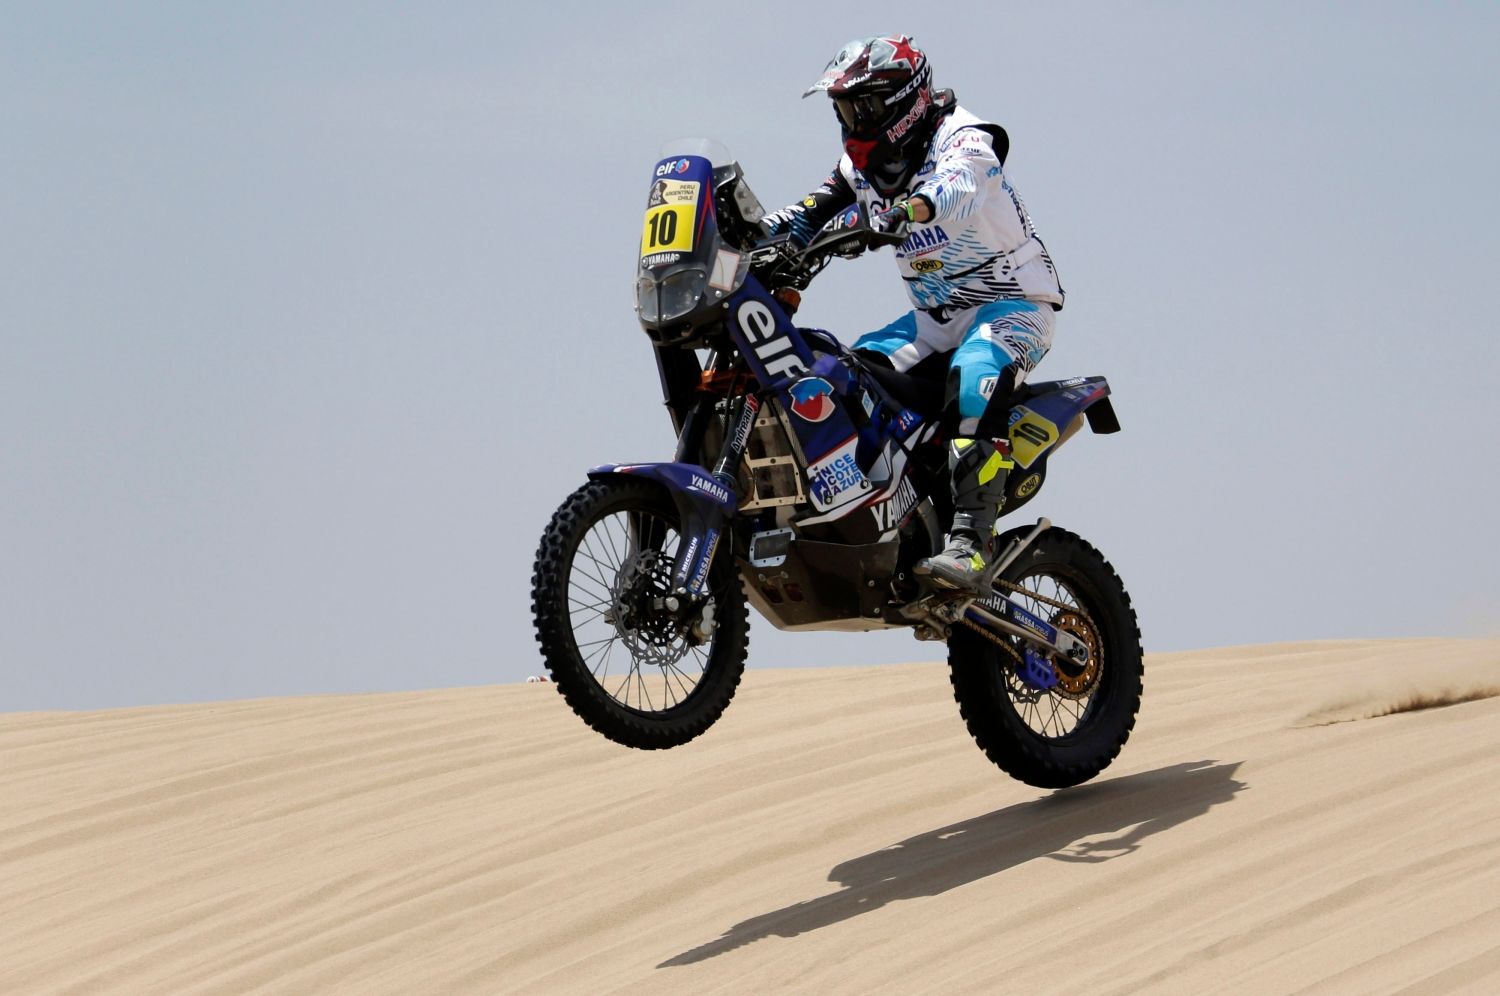 Rallye Dakar 2013, 1. etapa: David Casteu, Yamaha